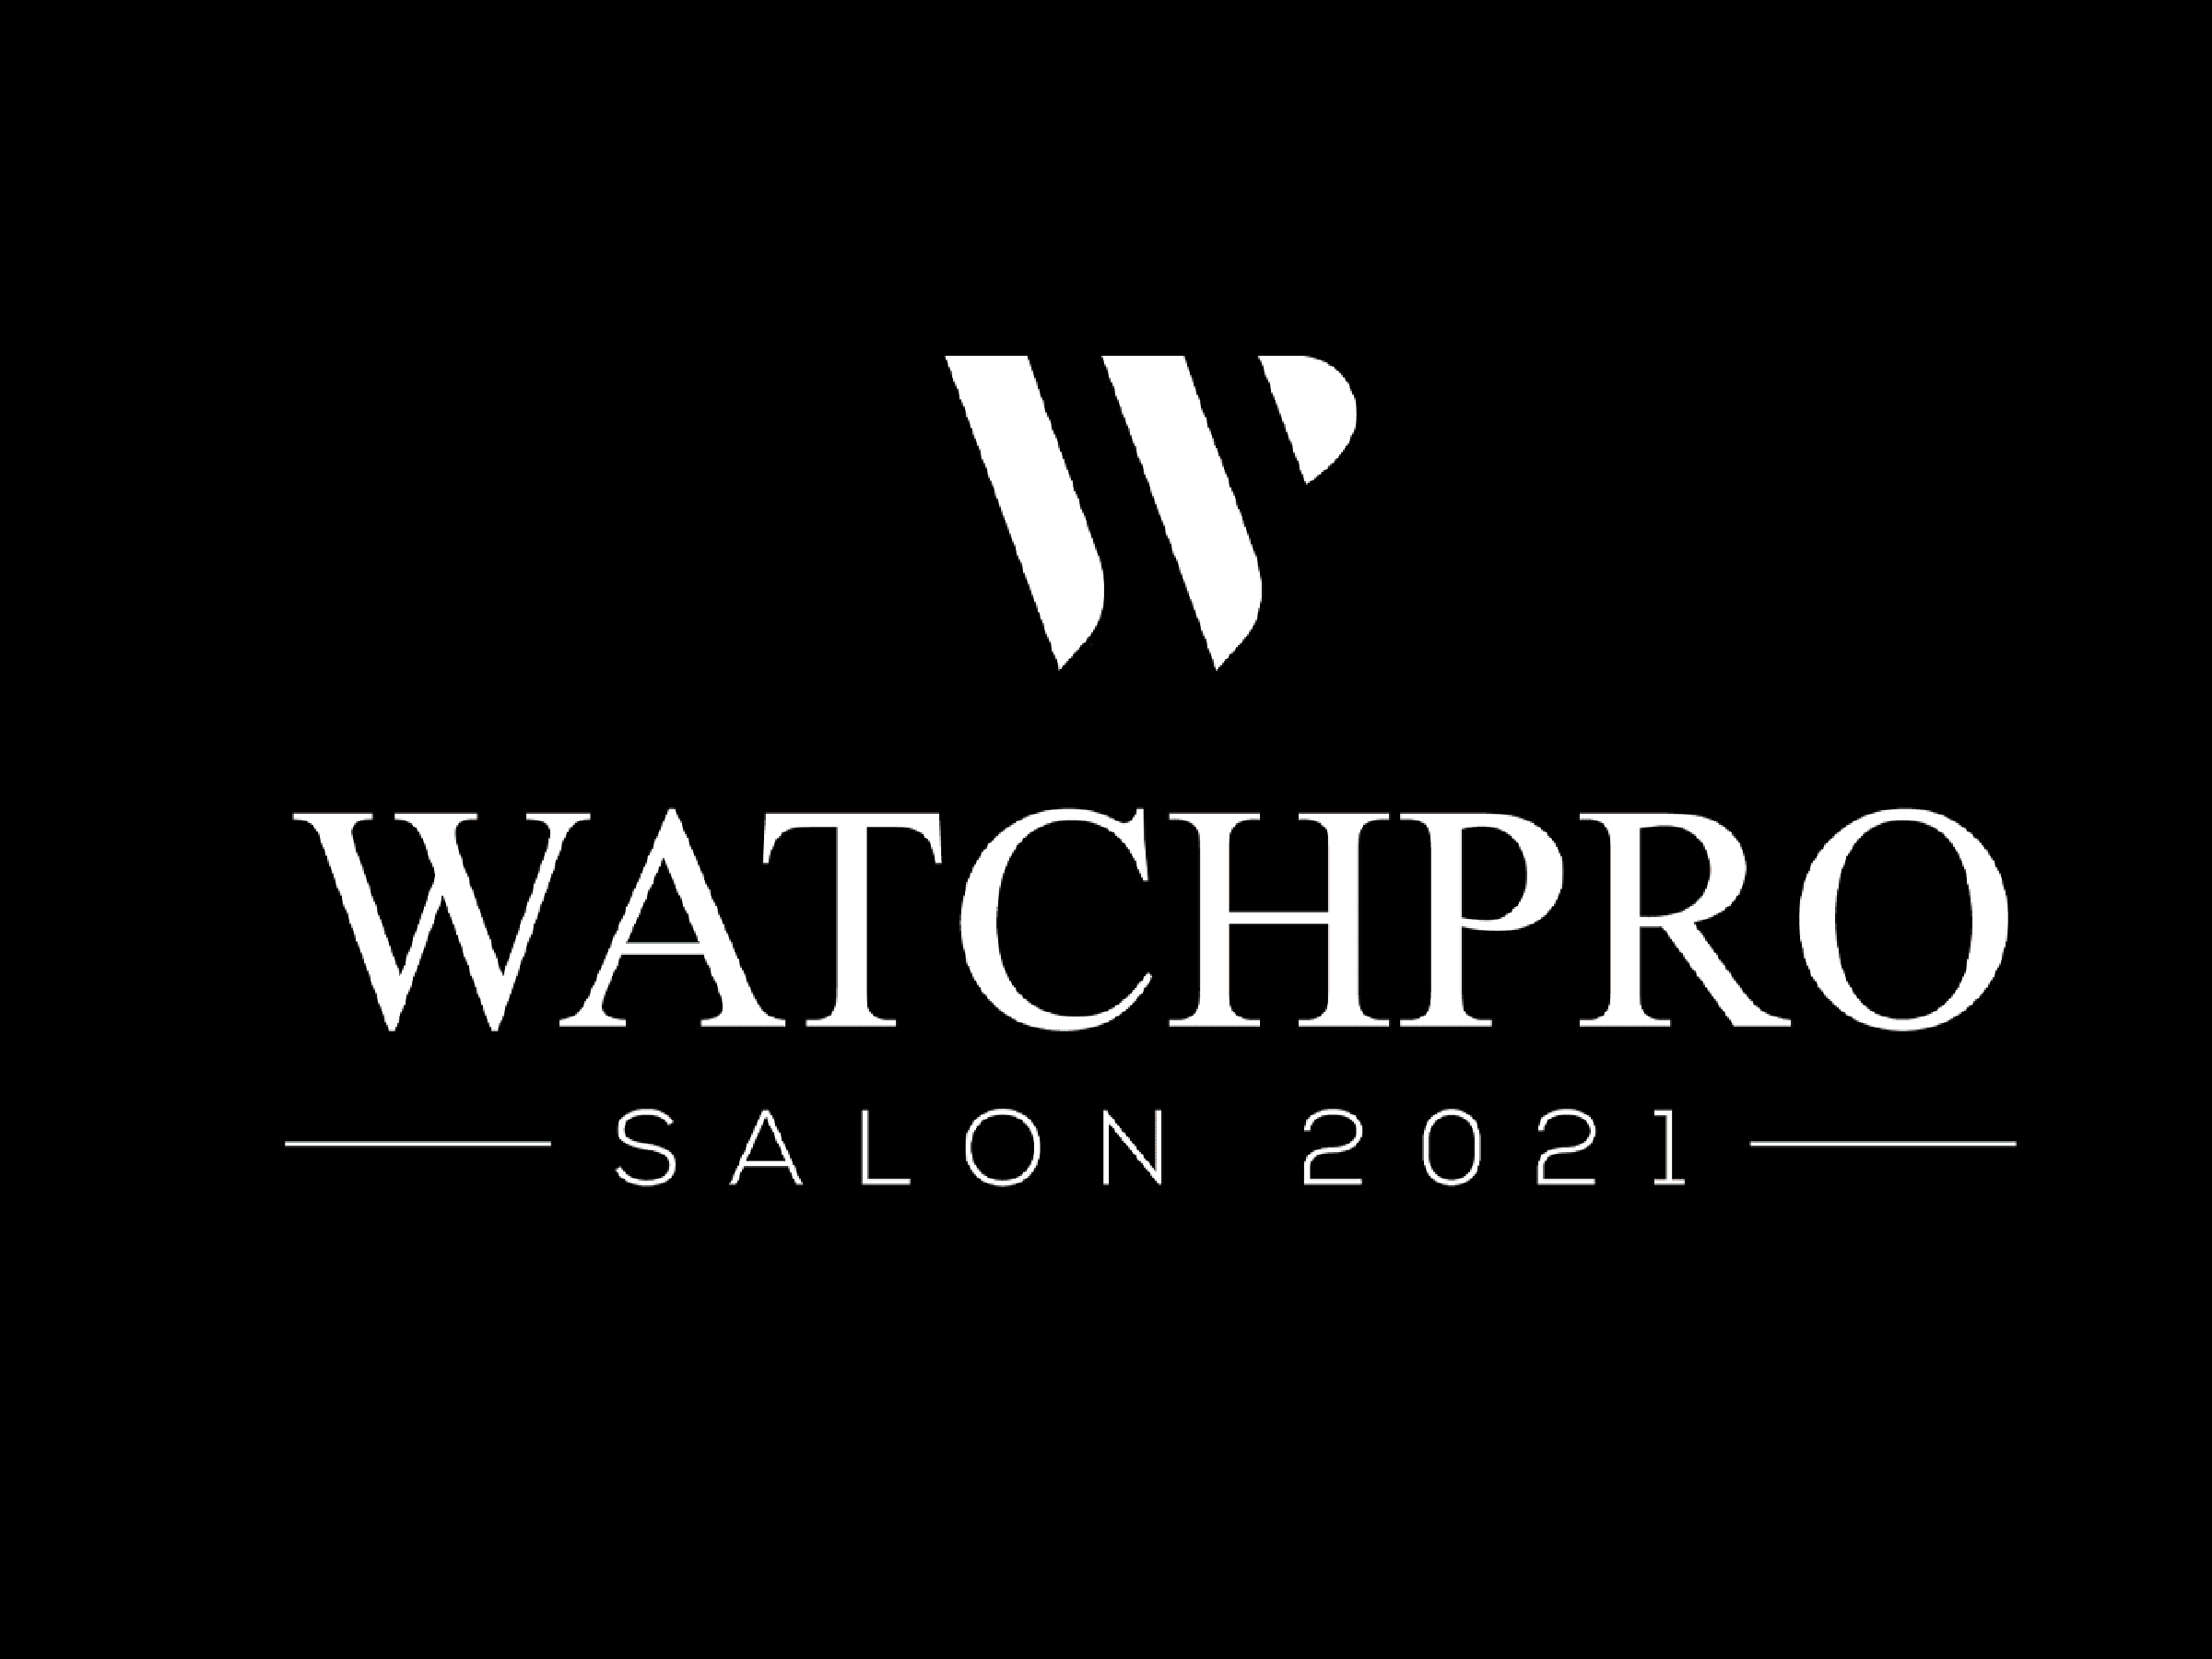 Watchpro salon logo white on black